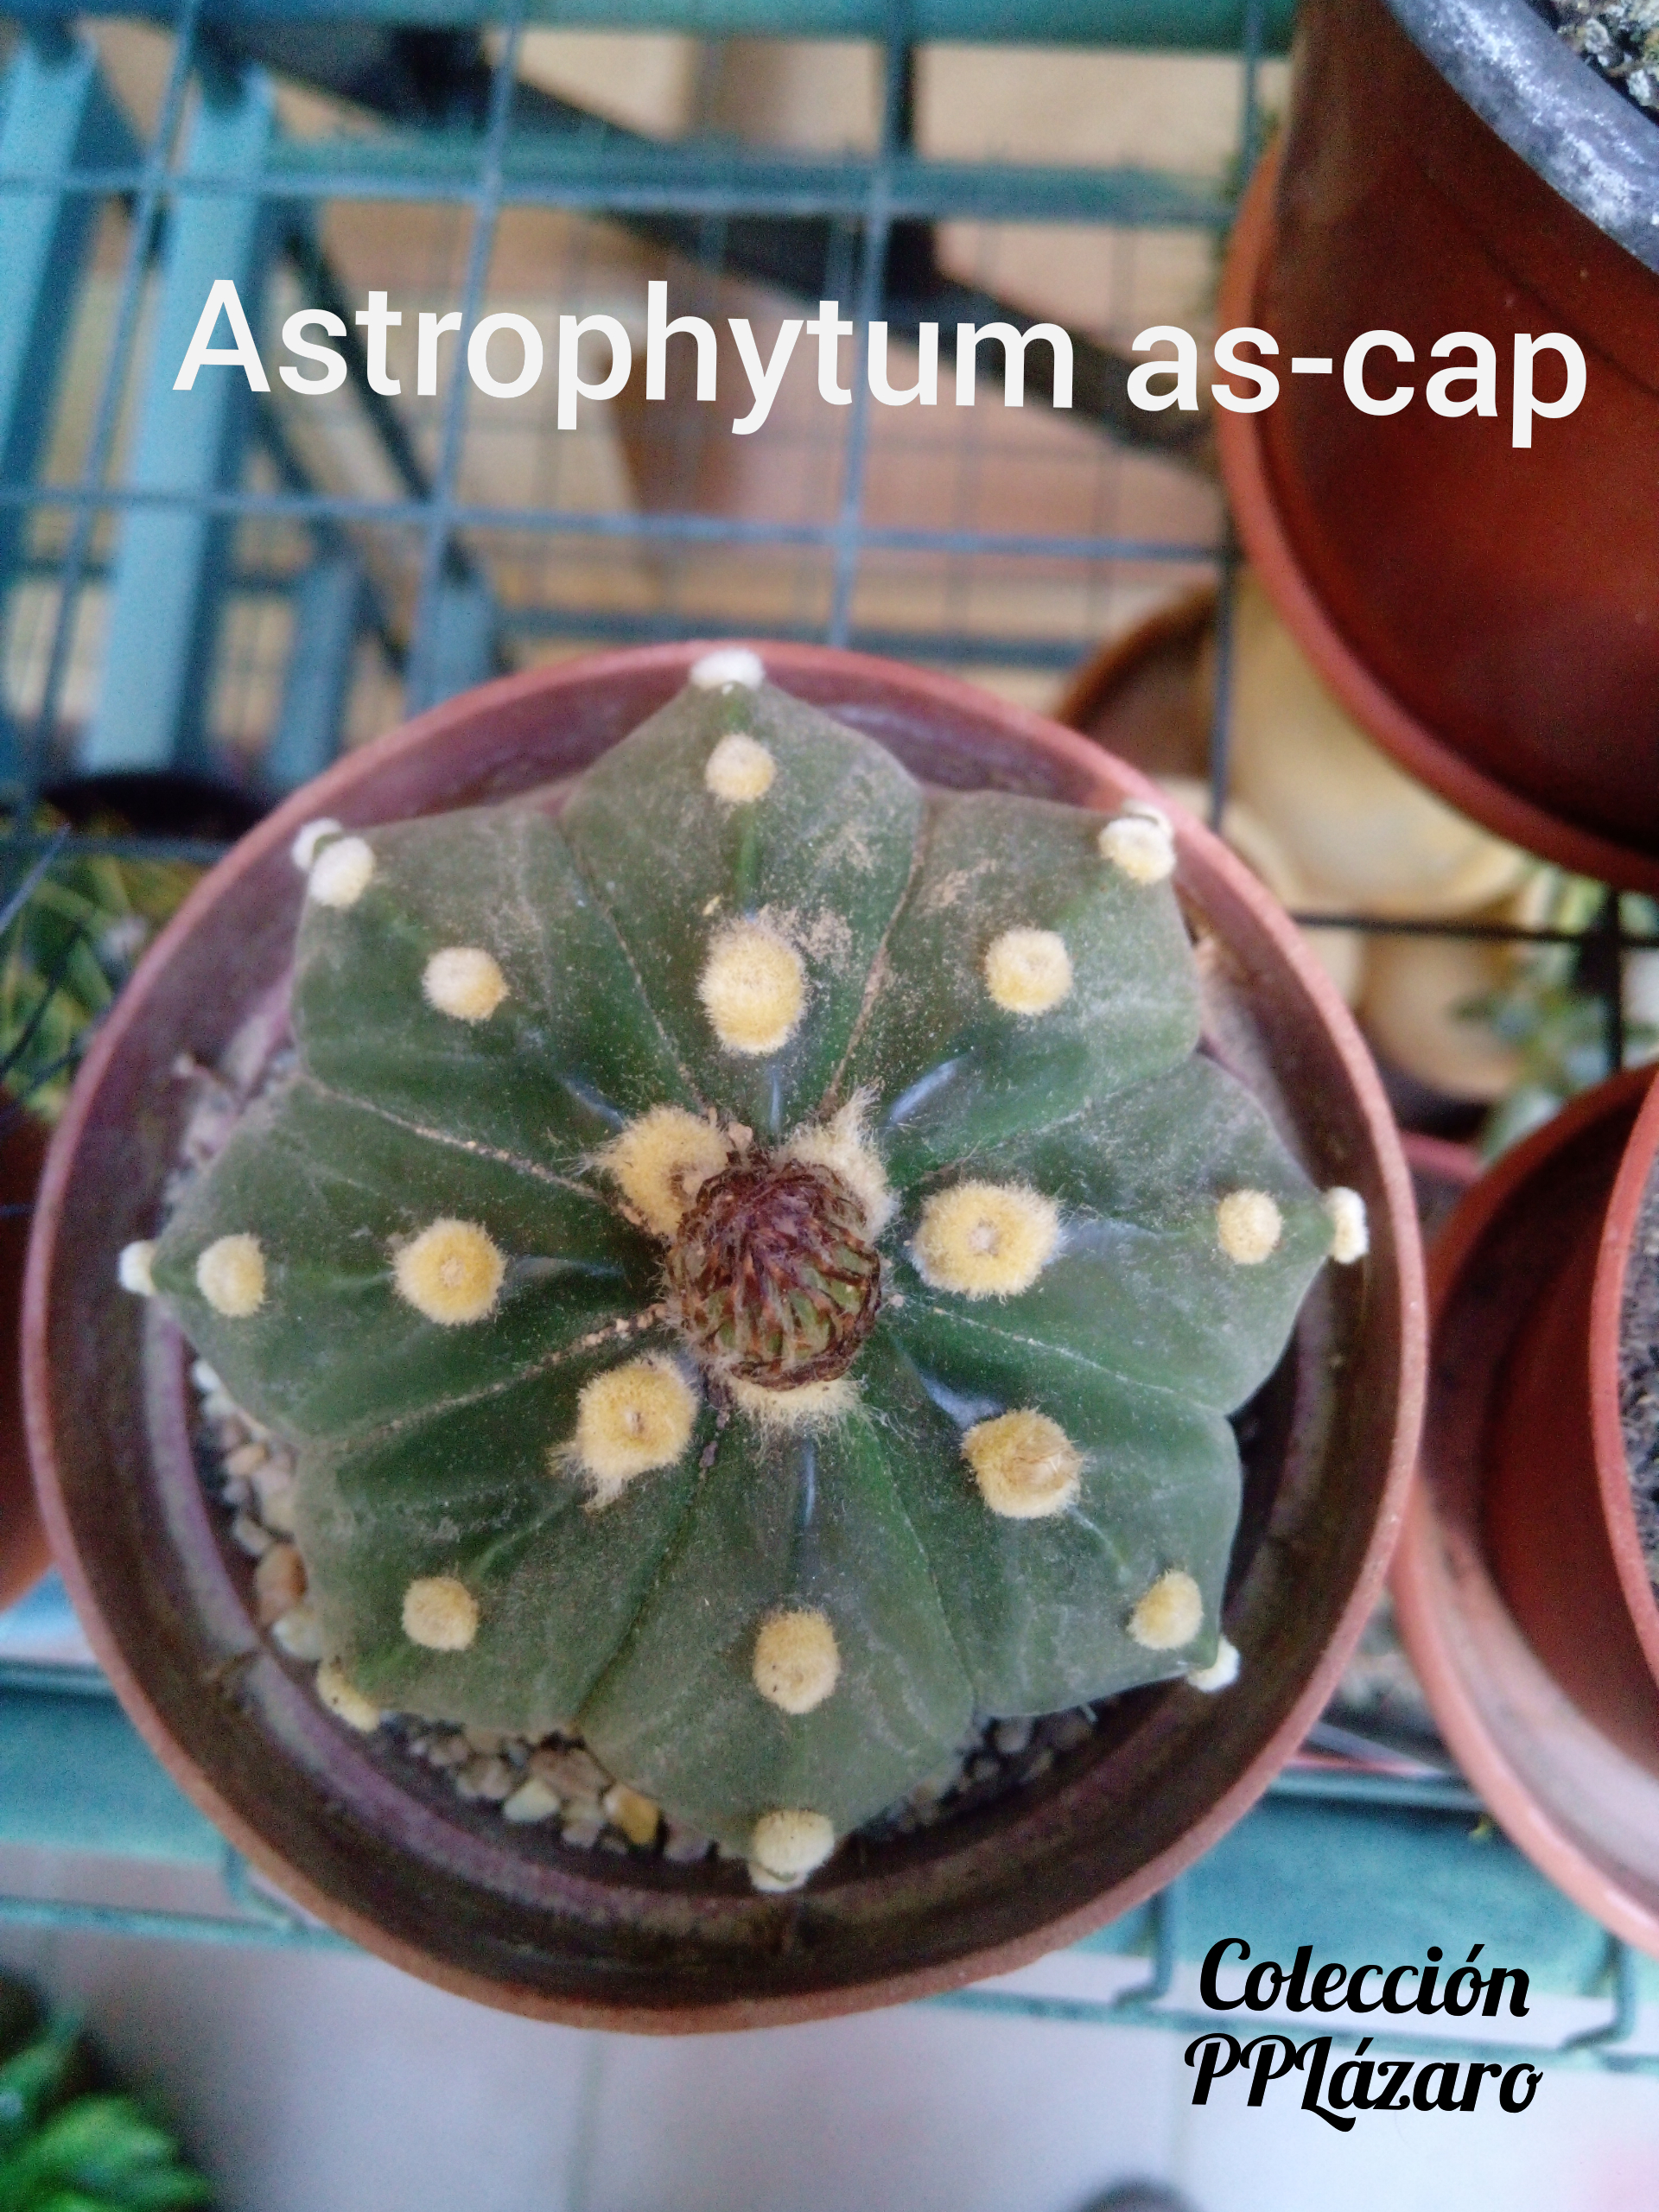 Astrophytum as-cap2 20180729.jpg